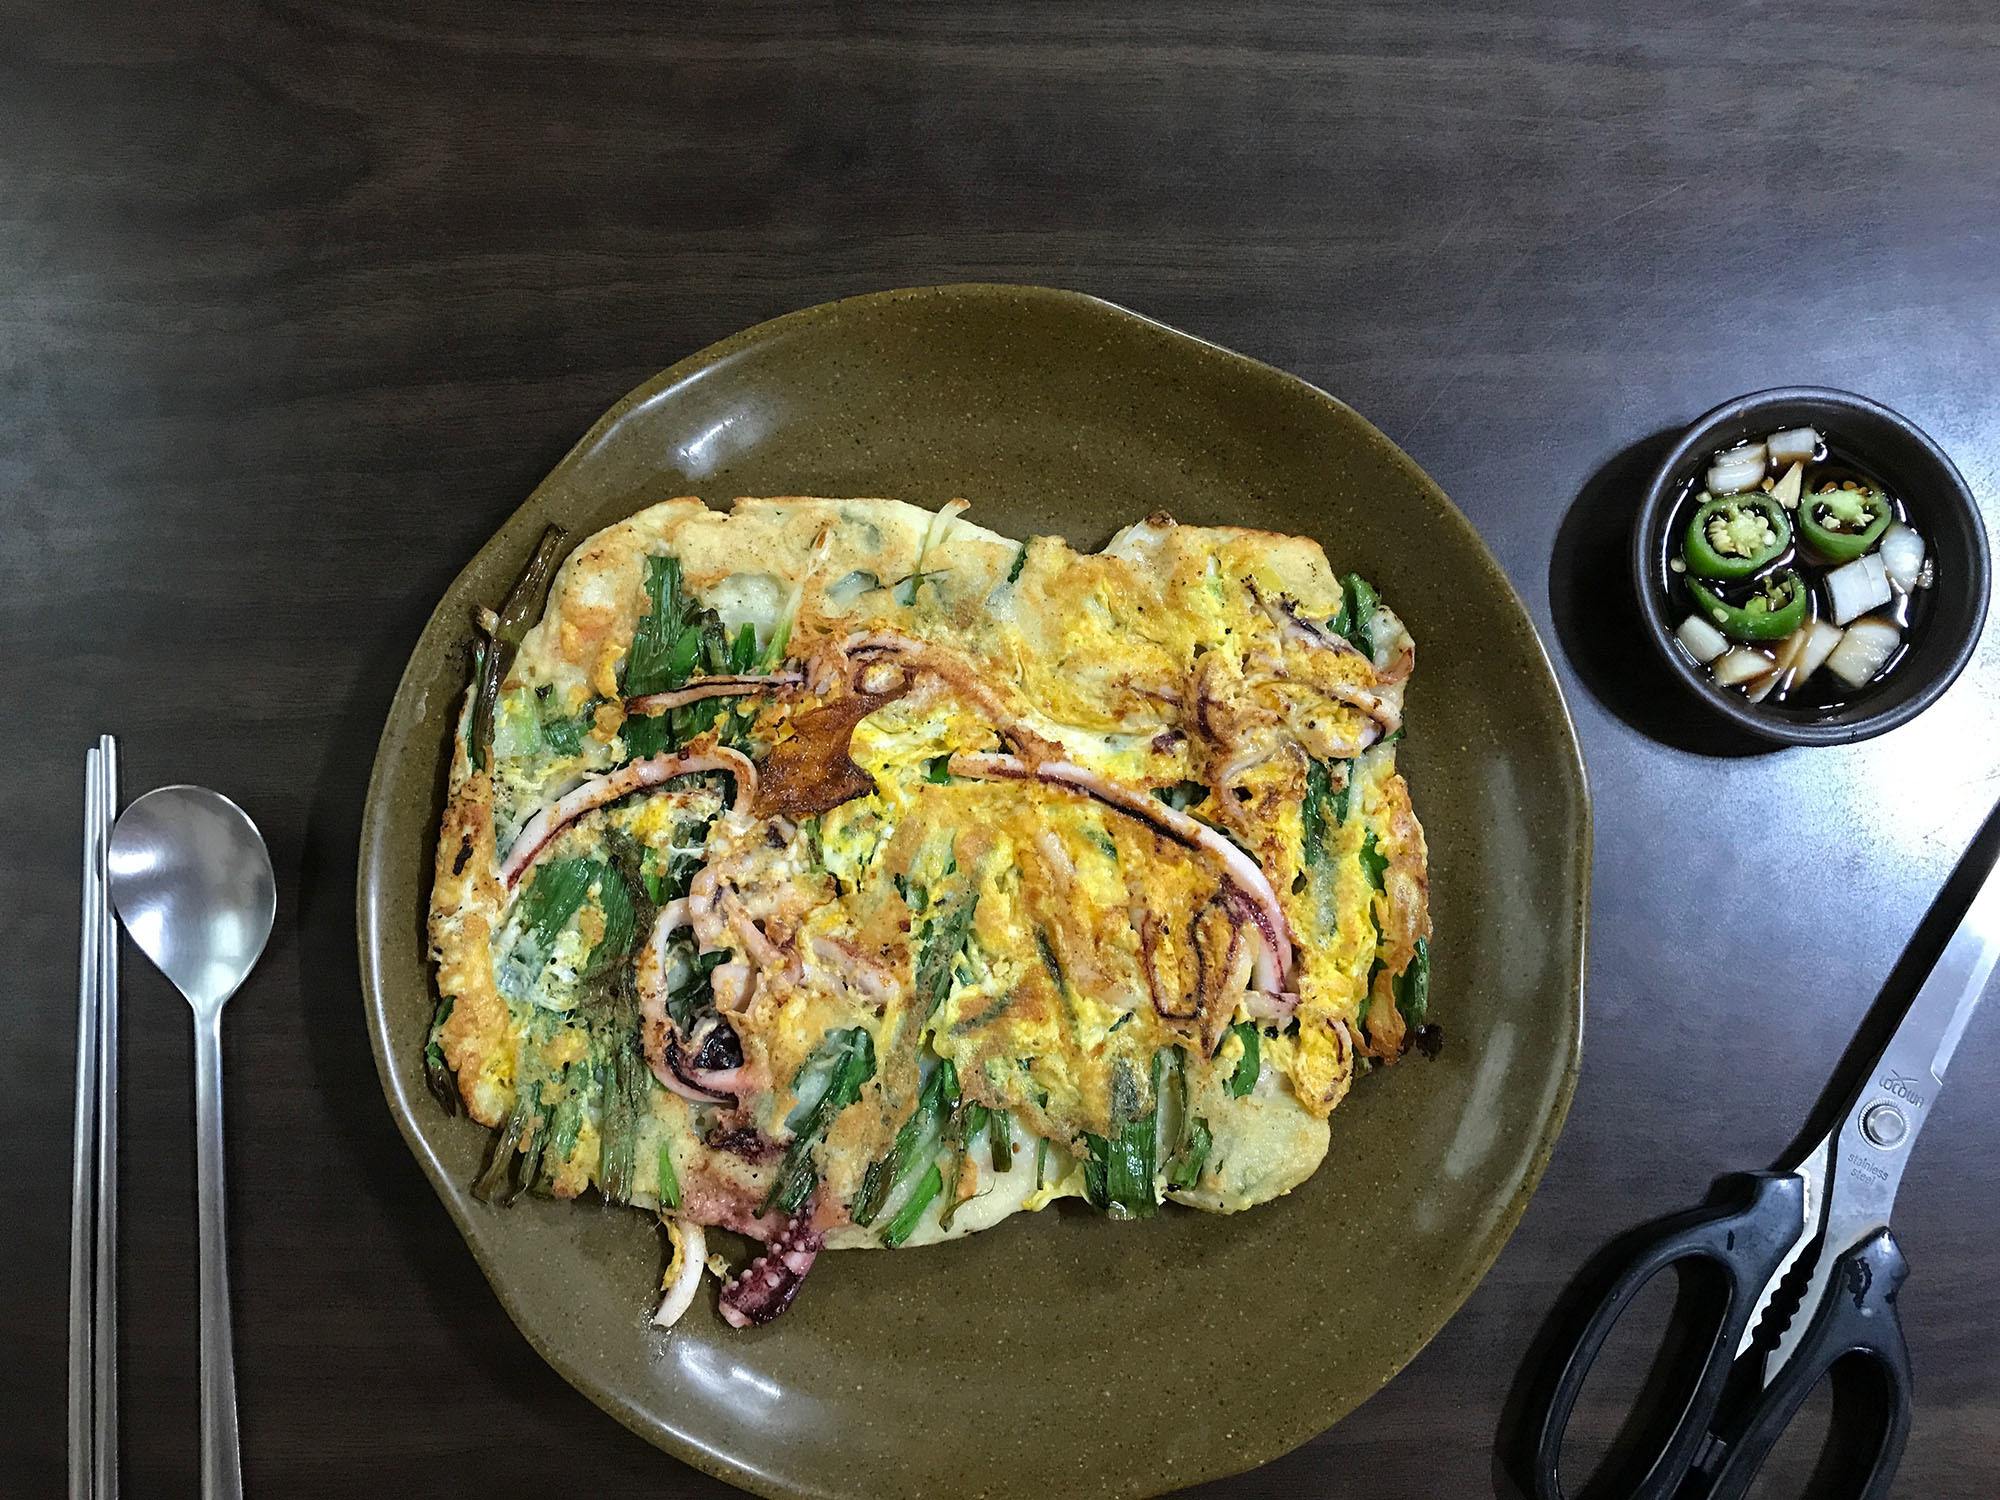 Seafood omelette at restaurant in Gyeongju Republic of Korea